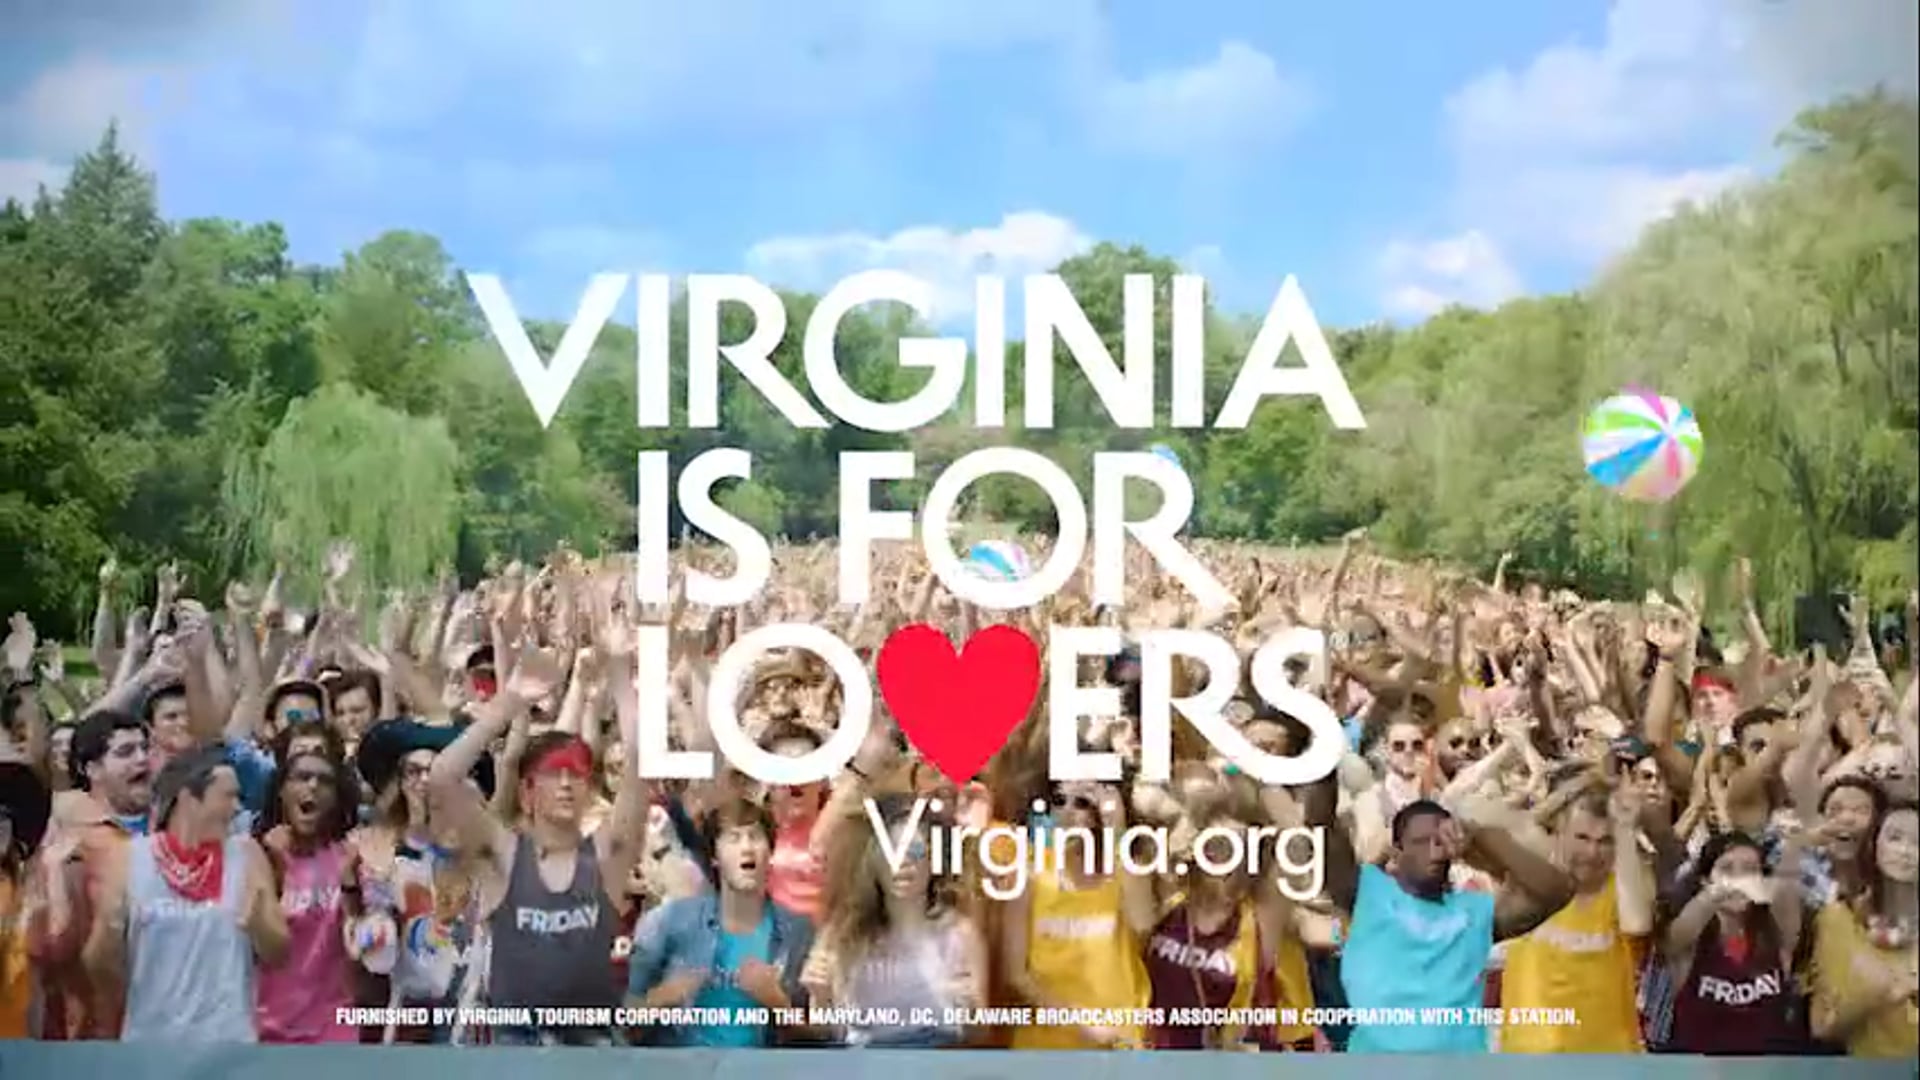 Virginia Tourism "Crush Friday"